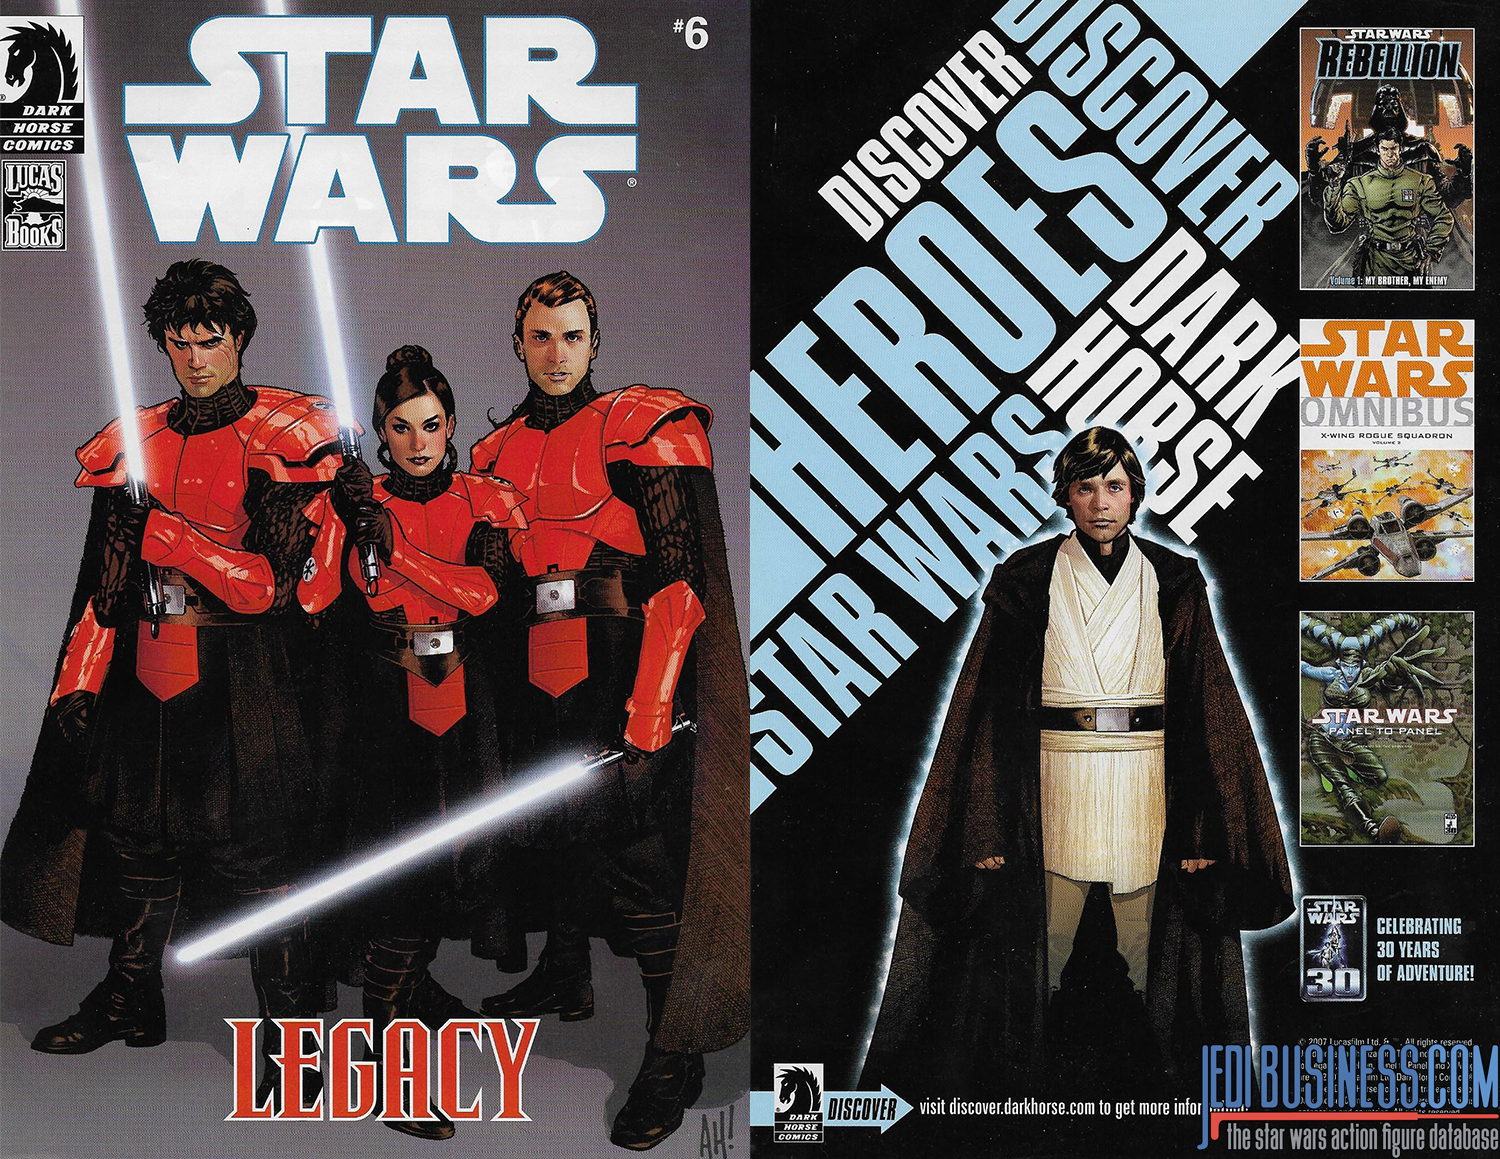 Star Wars Comic Book Cover